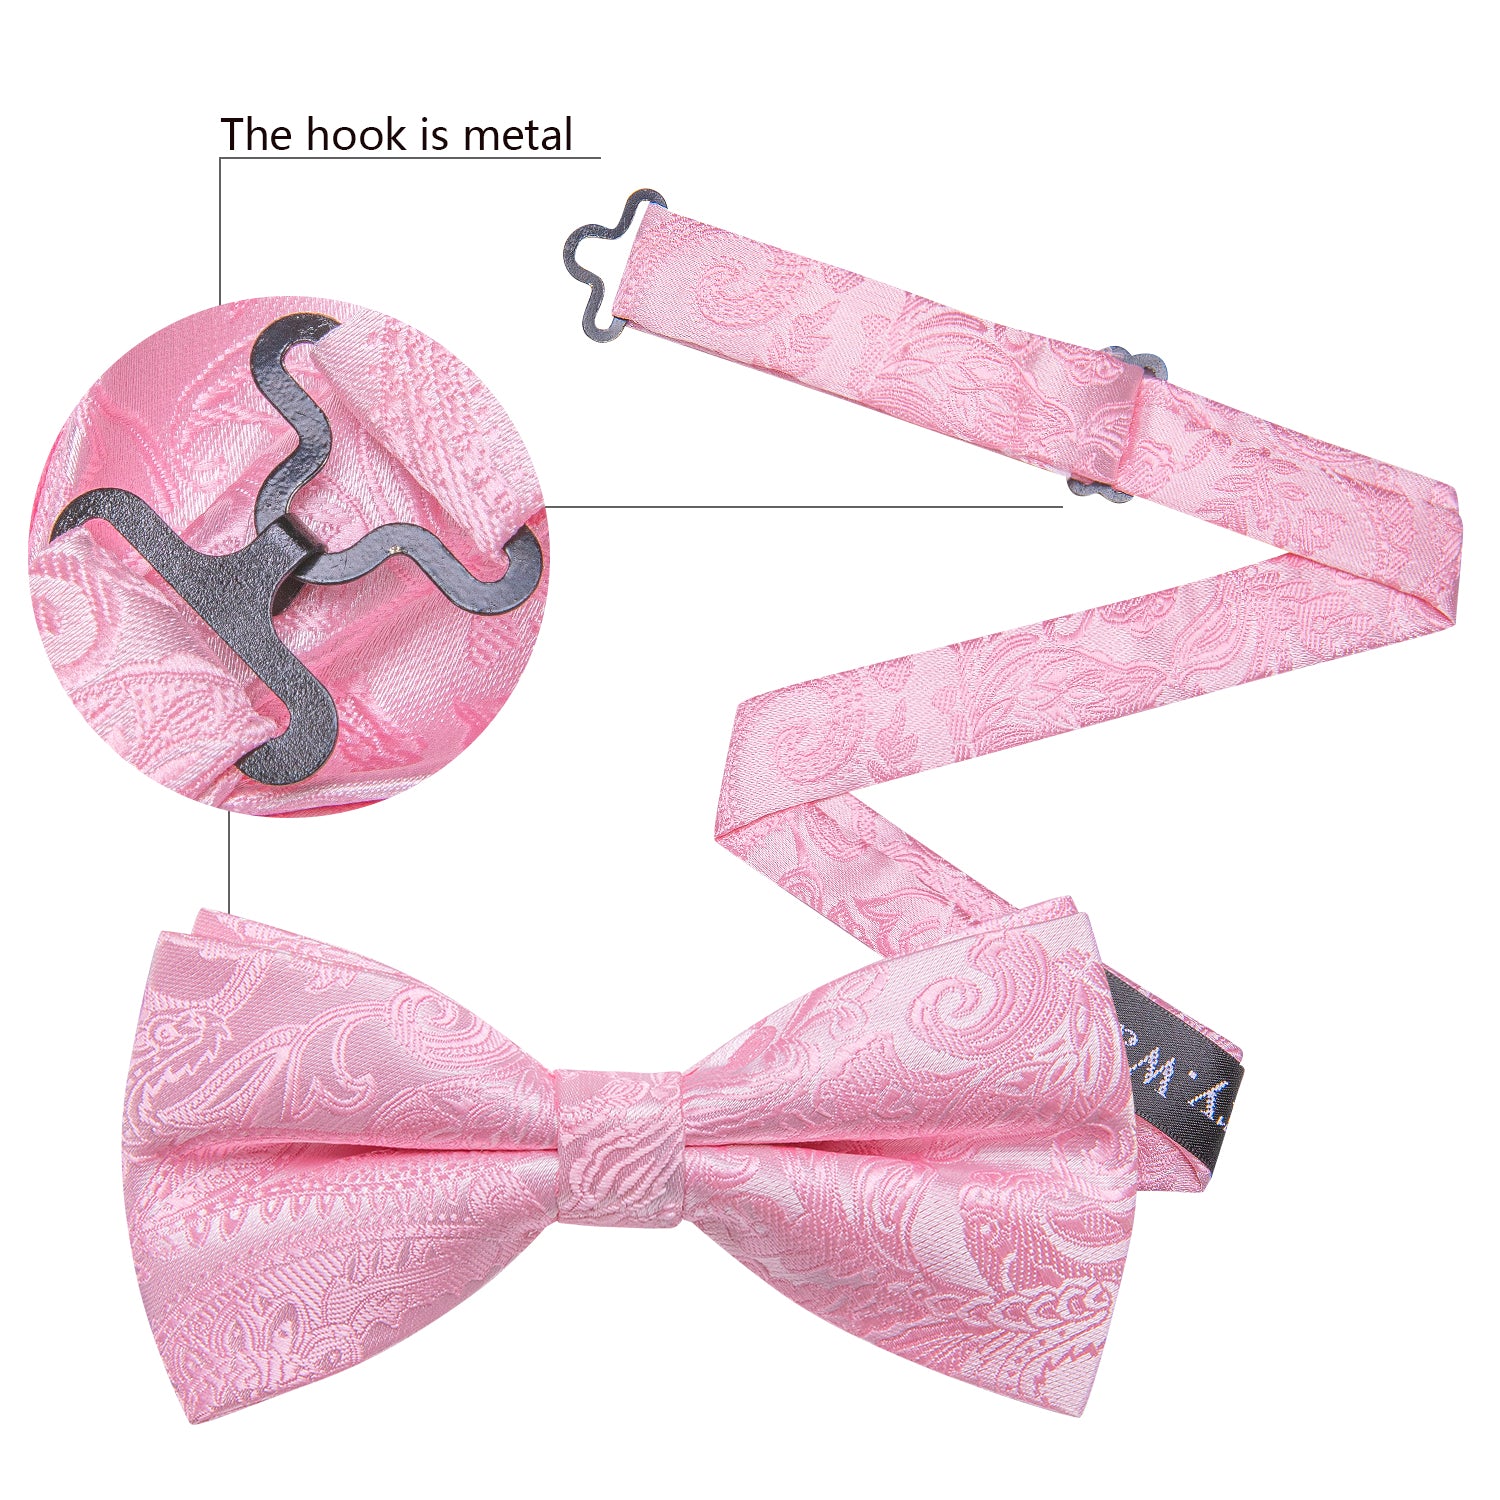 Mist Pink Paisley Pre-tied Bow Tie Hanky Cufflinks Set